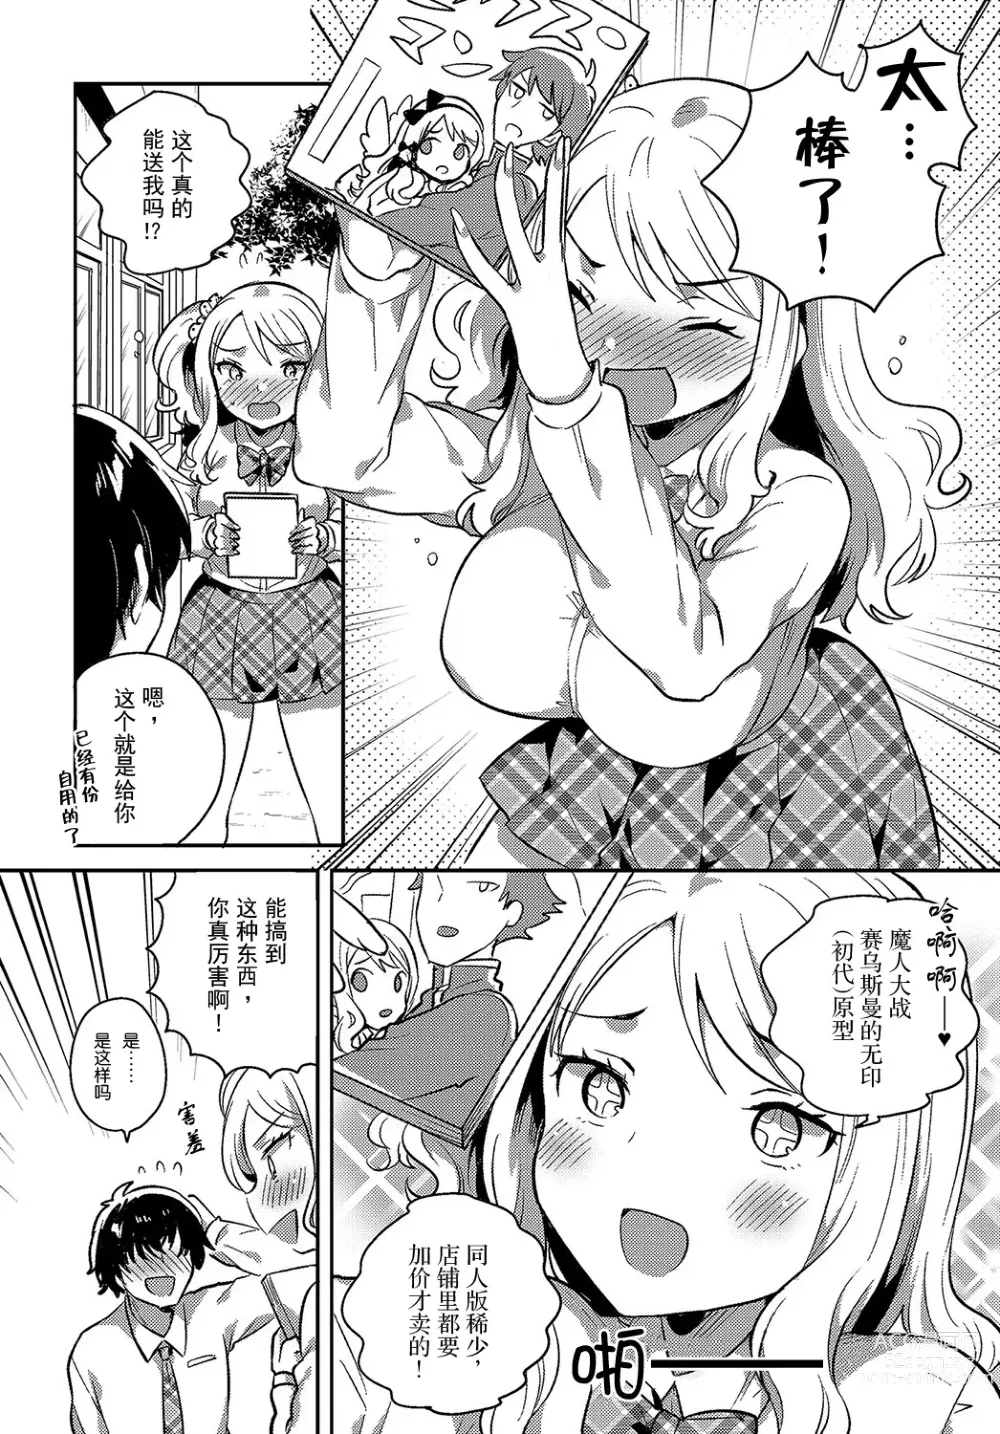 Page 2 of manga 柳田同学喜欢的事